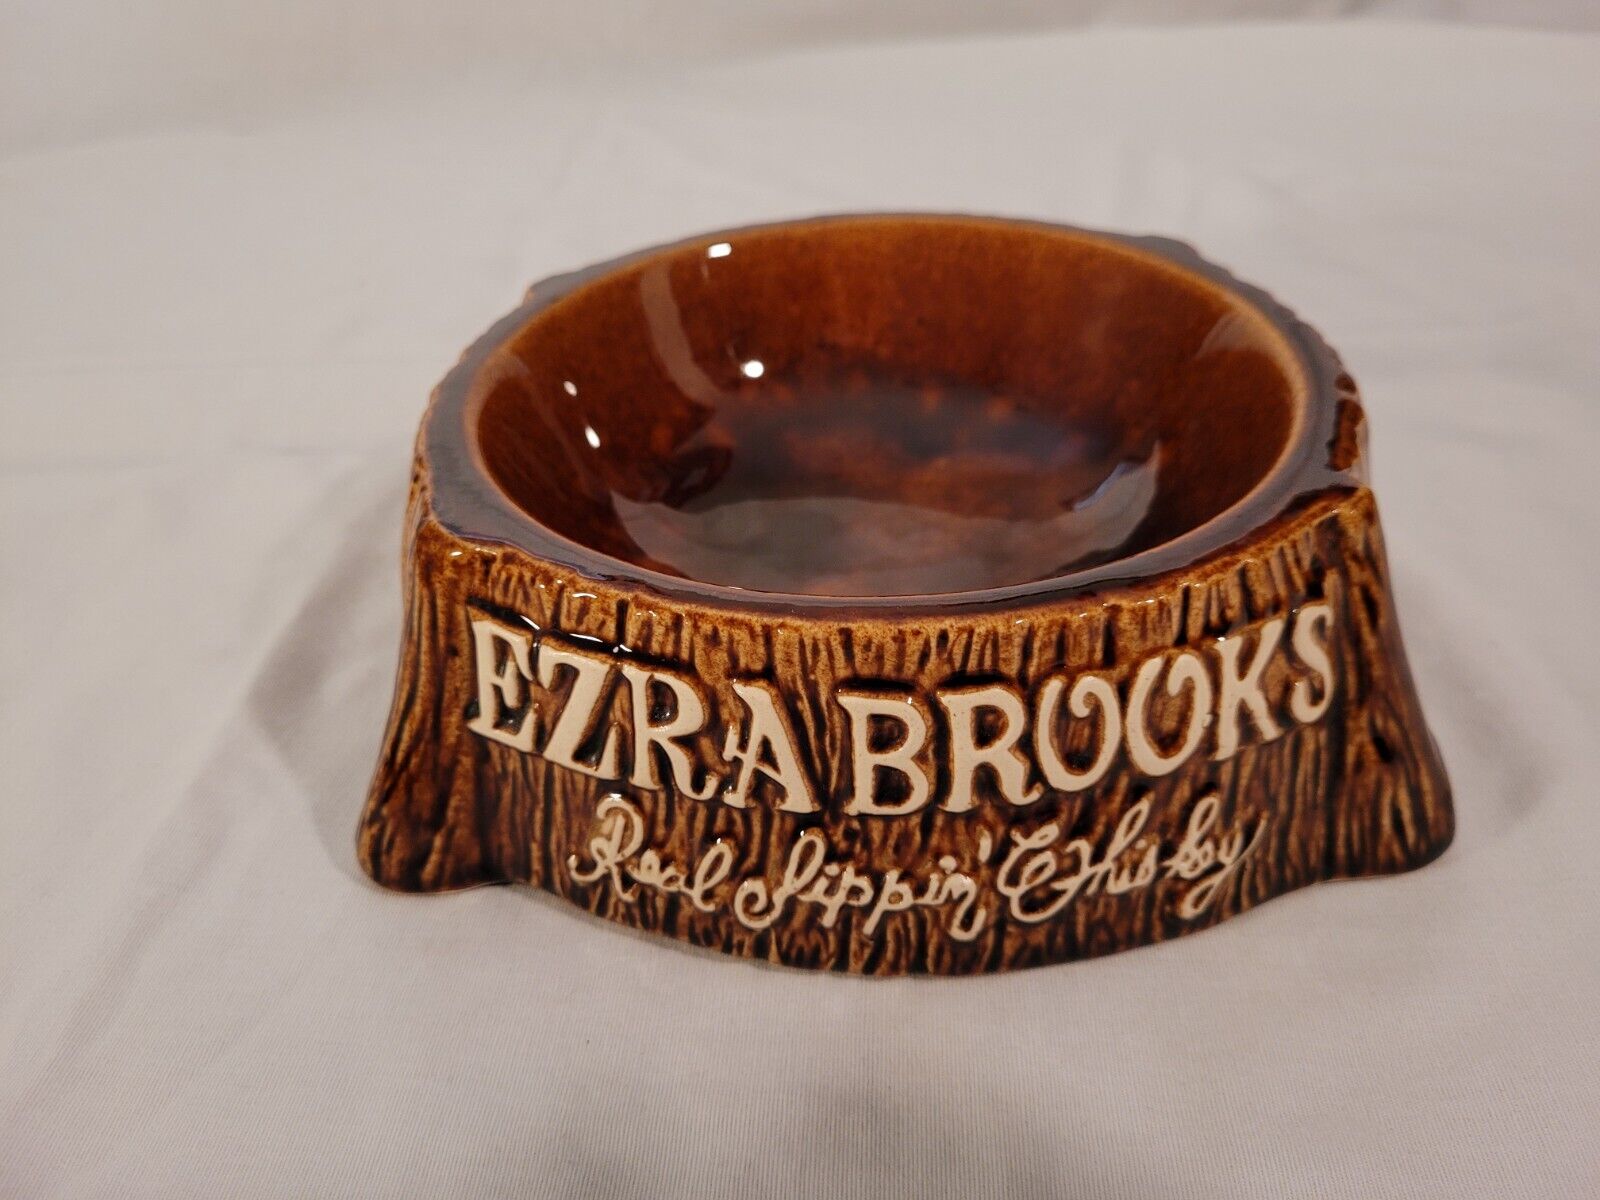 Vintage Ezra Brooks Ashtray Bowl Real Sippin Whiskey